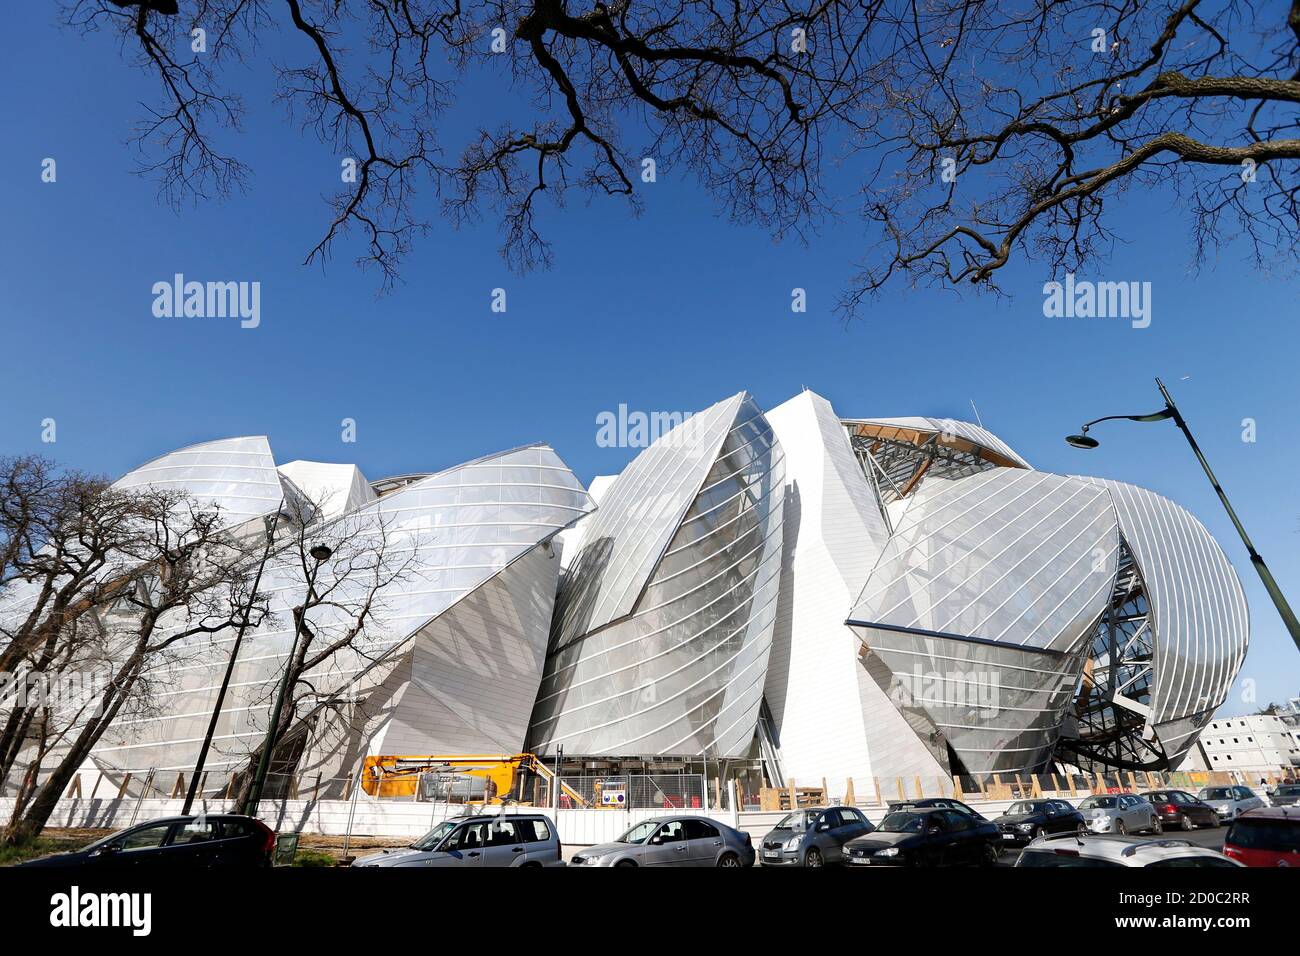 A general view shows the construction site of the Fondation Louis Vuitton designed by architect Frank Gehry in the Bois de Boulogne, Paris, March 17, 2014. Louis Vuitton Foundation